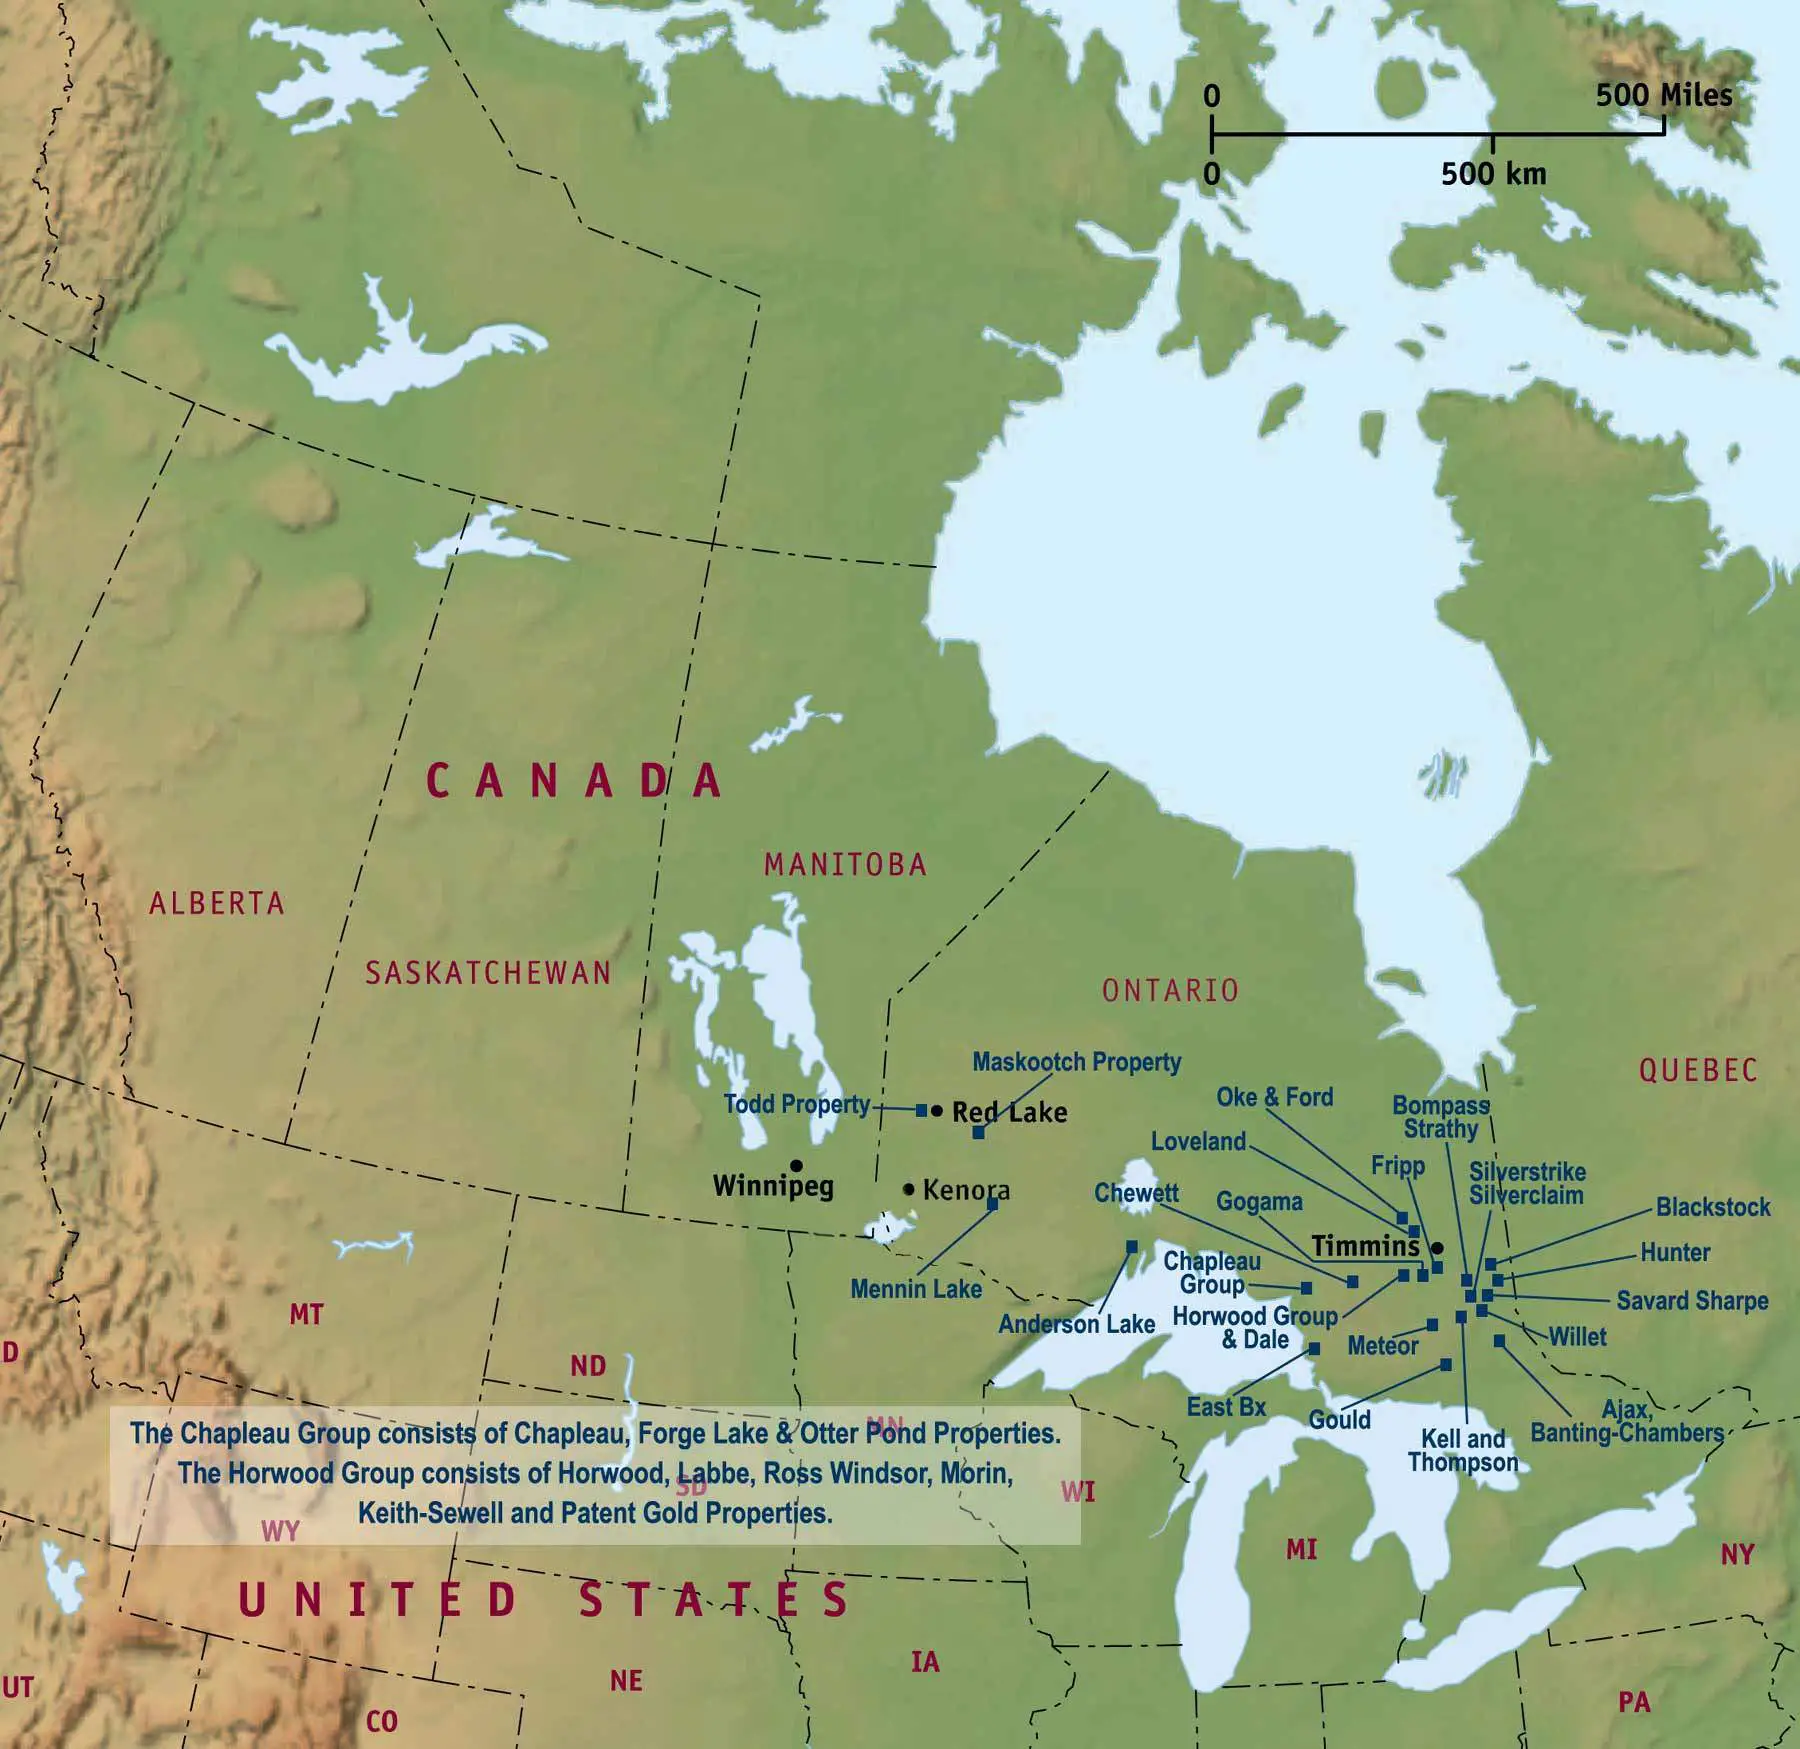 Ontario Canada • Mapsof.net